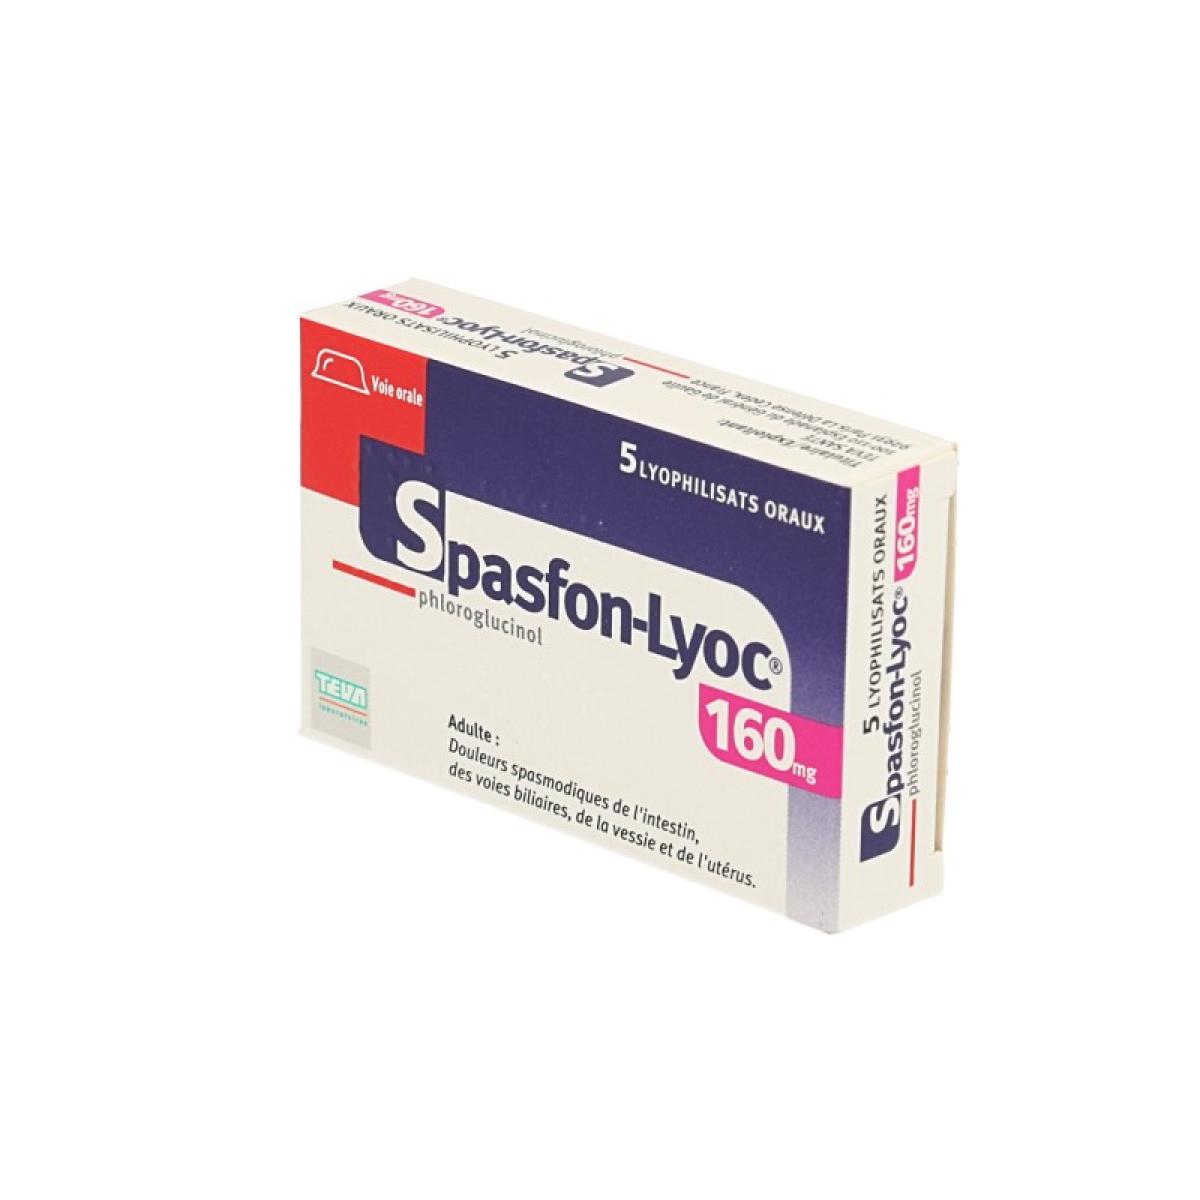 Teva Sante Spasfon Lyoc 160mg Oral Boite De 5 Lyophilisats Medicaments Pharmarket